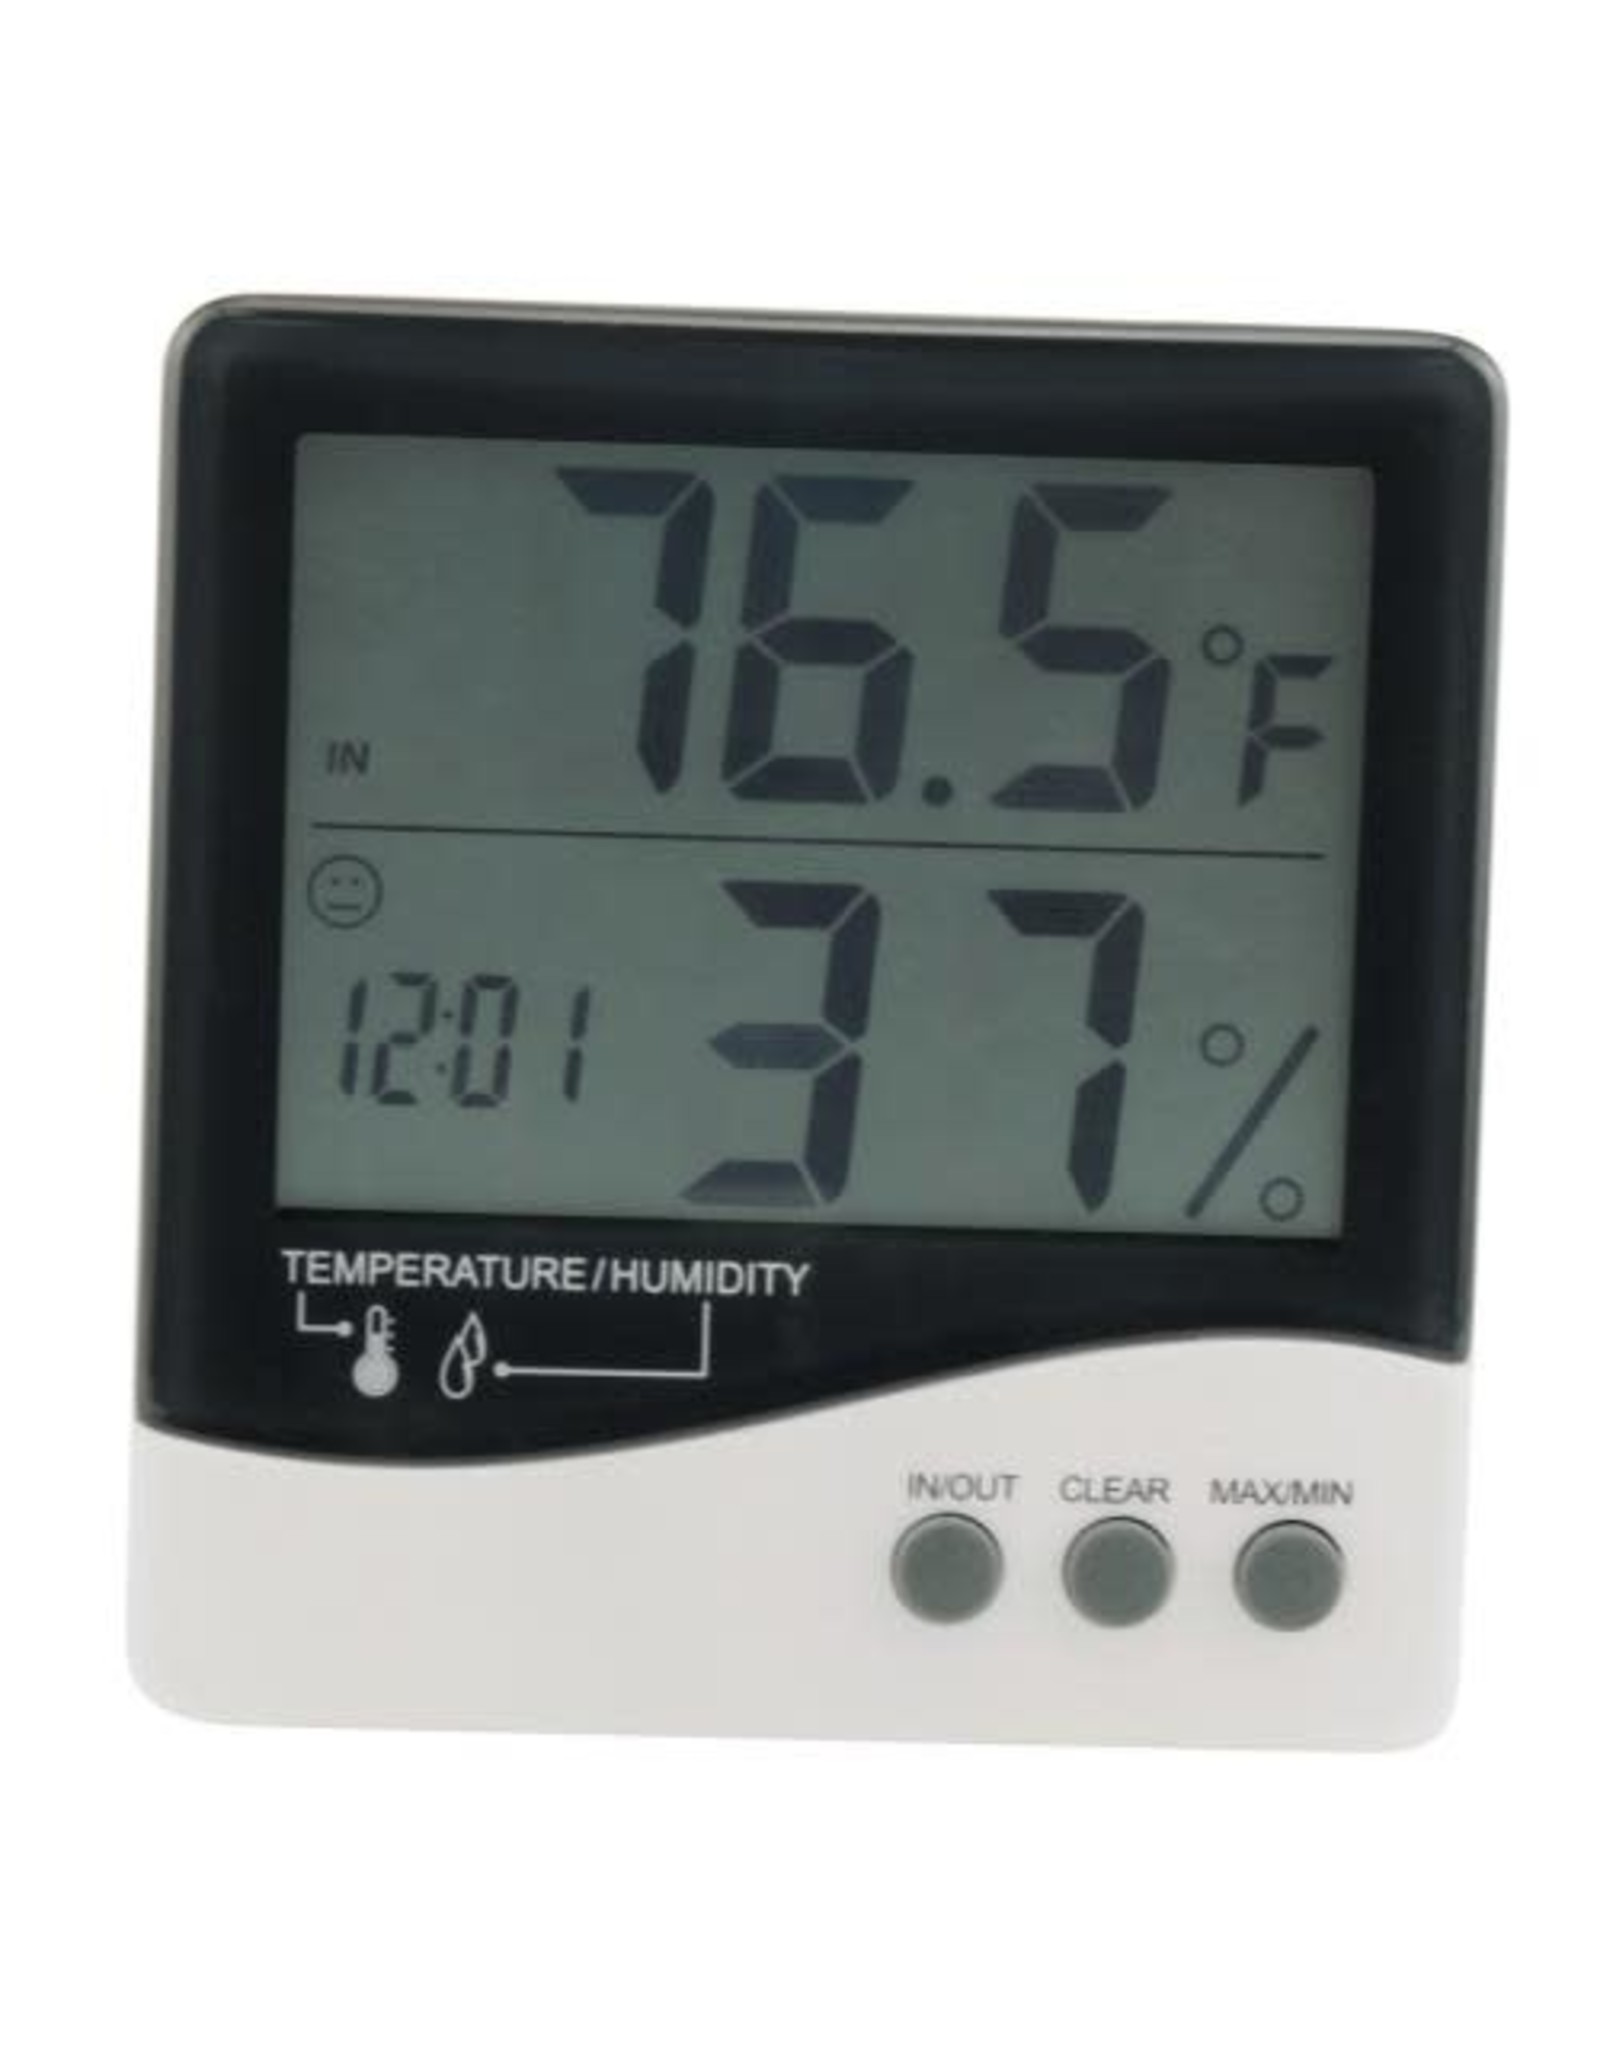 Growers Edge Grower's Edge® Large Display Digital Thermometer & Hygrometer